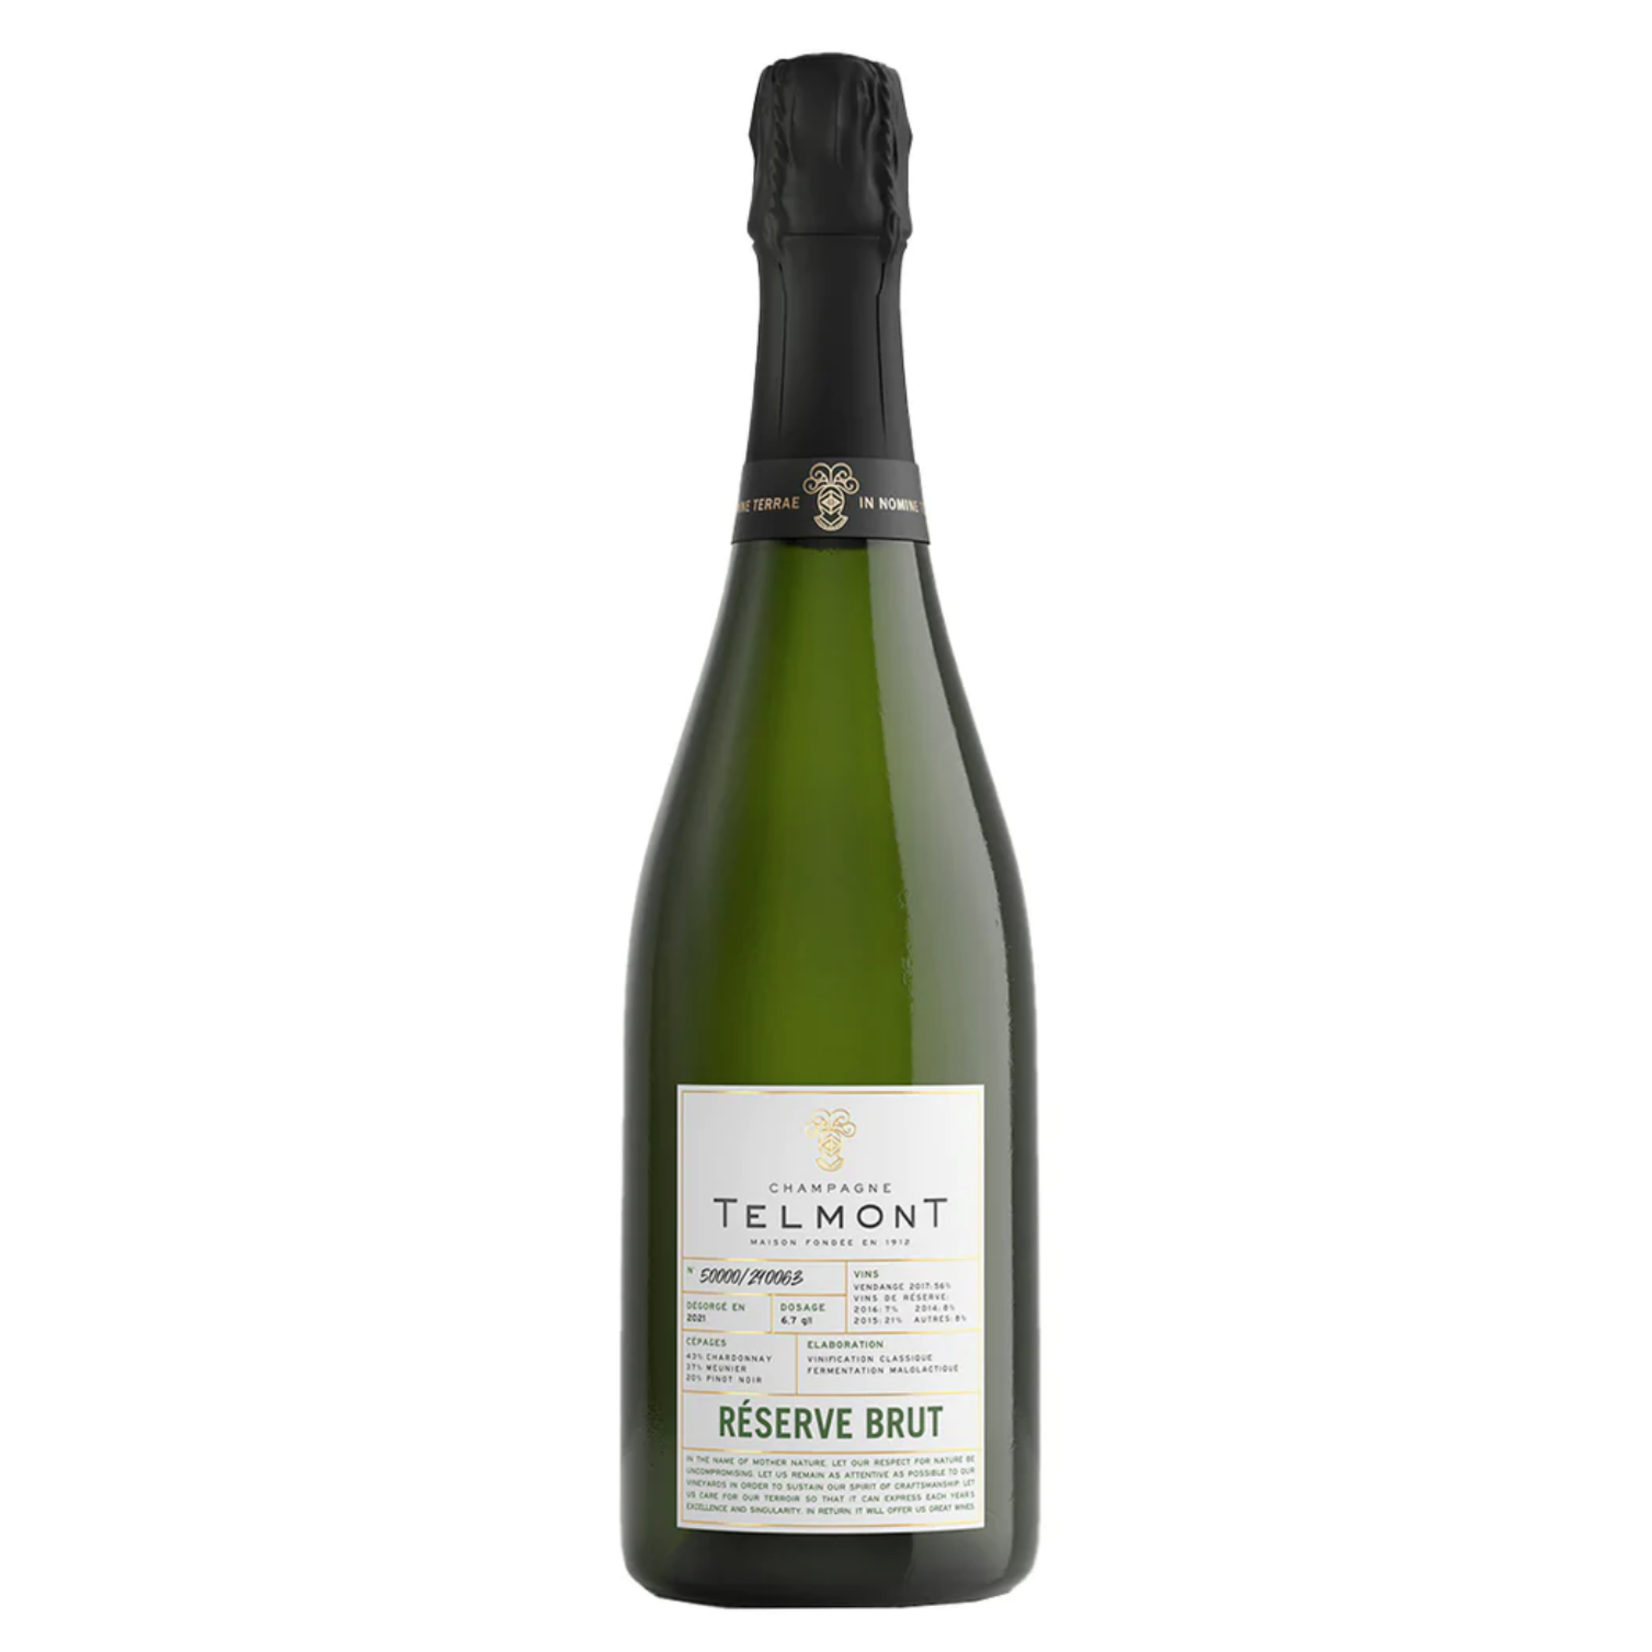 NV, Telmont Reserve Brut, Champagne, Damery 44% Blend, Champagne, France, 12% Alc, TWnr, A3,Sw1,Sm3,C4,I3